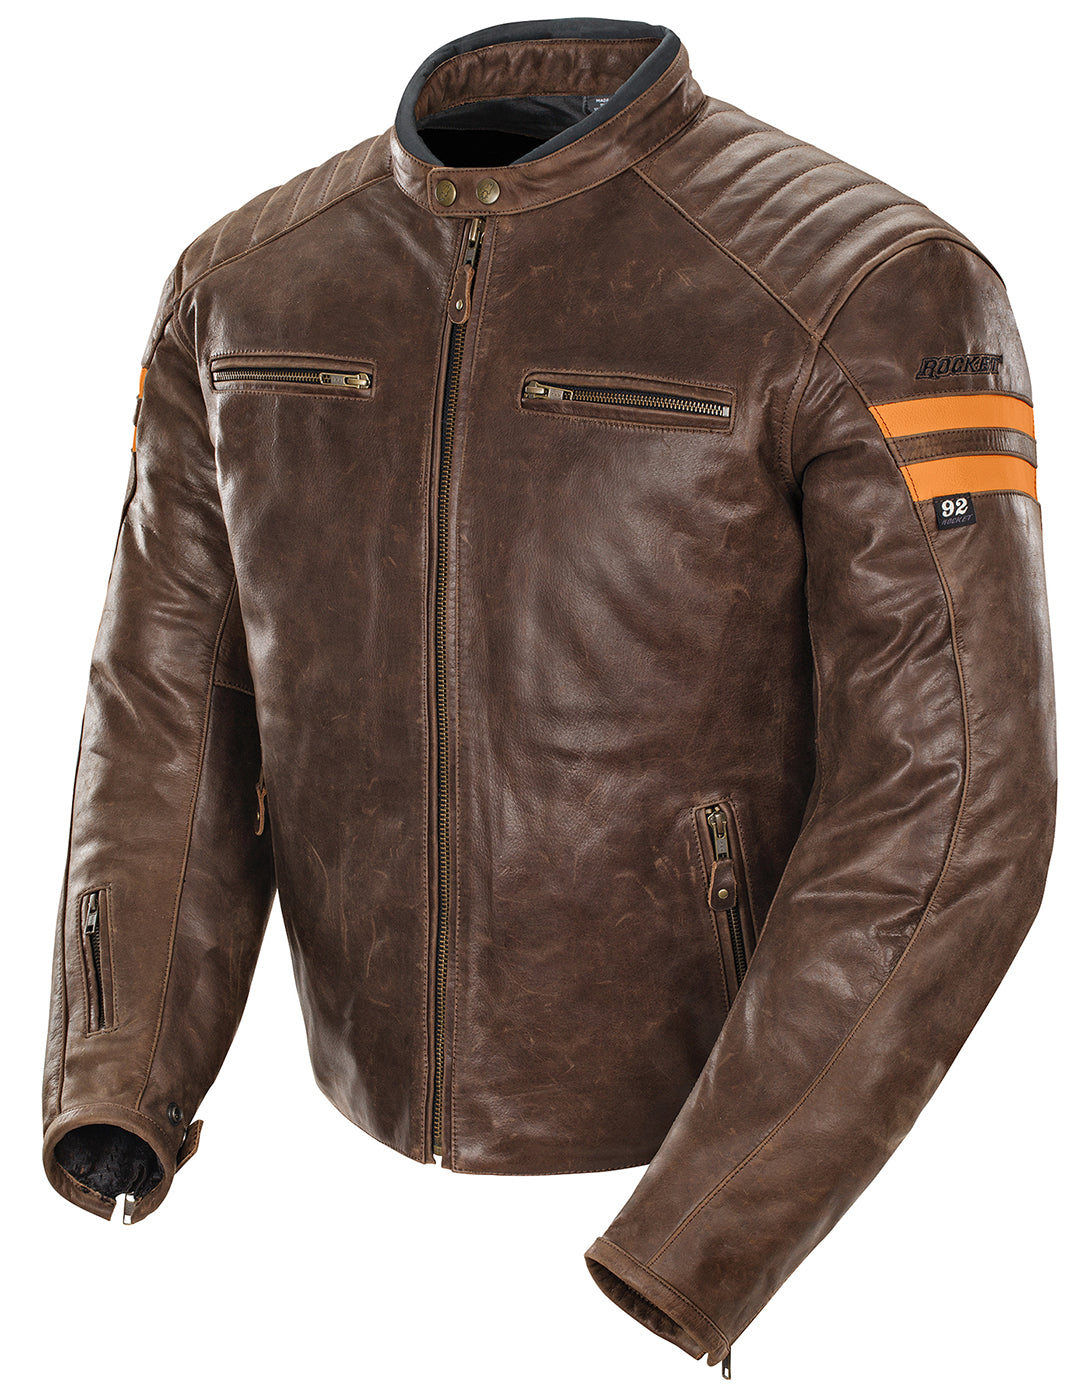 Joe Rocket Classic '92 Leather Jacket - Brown/Orange